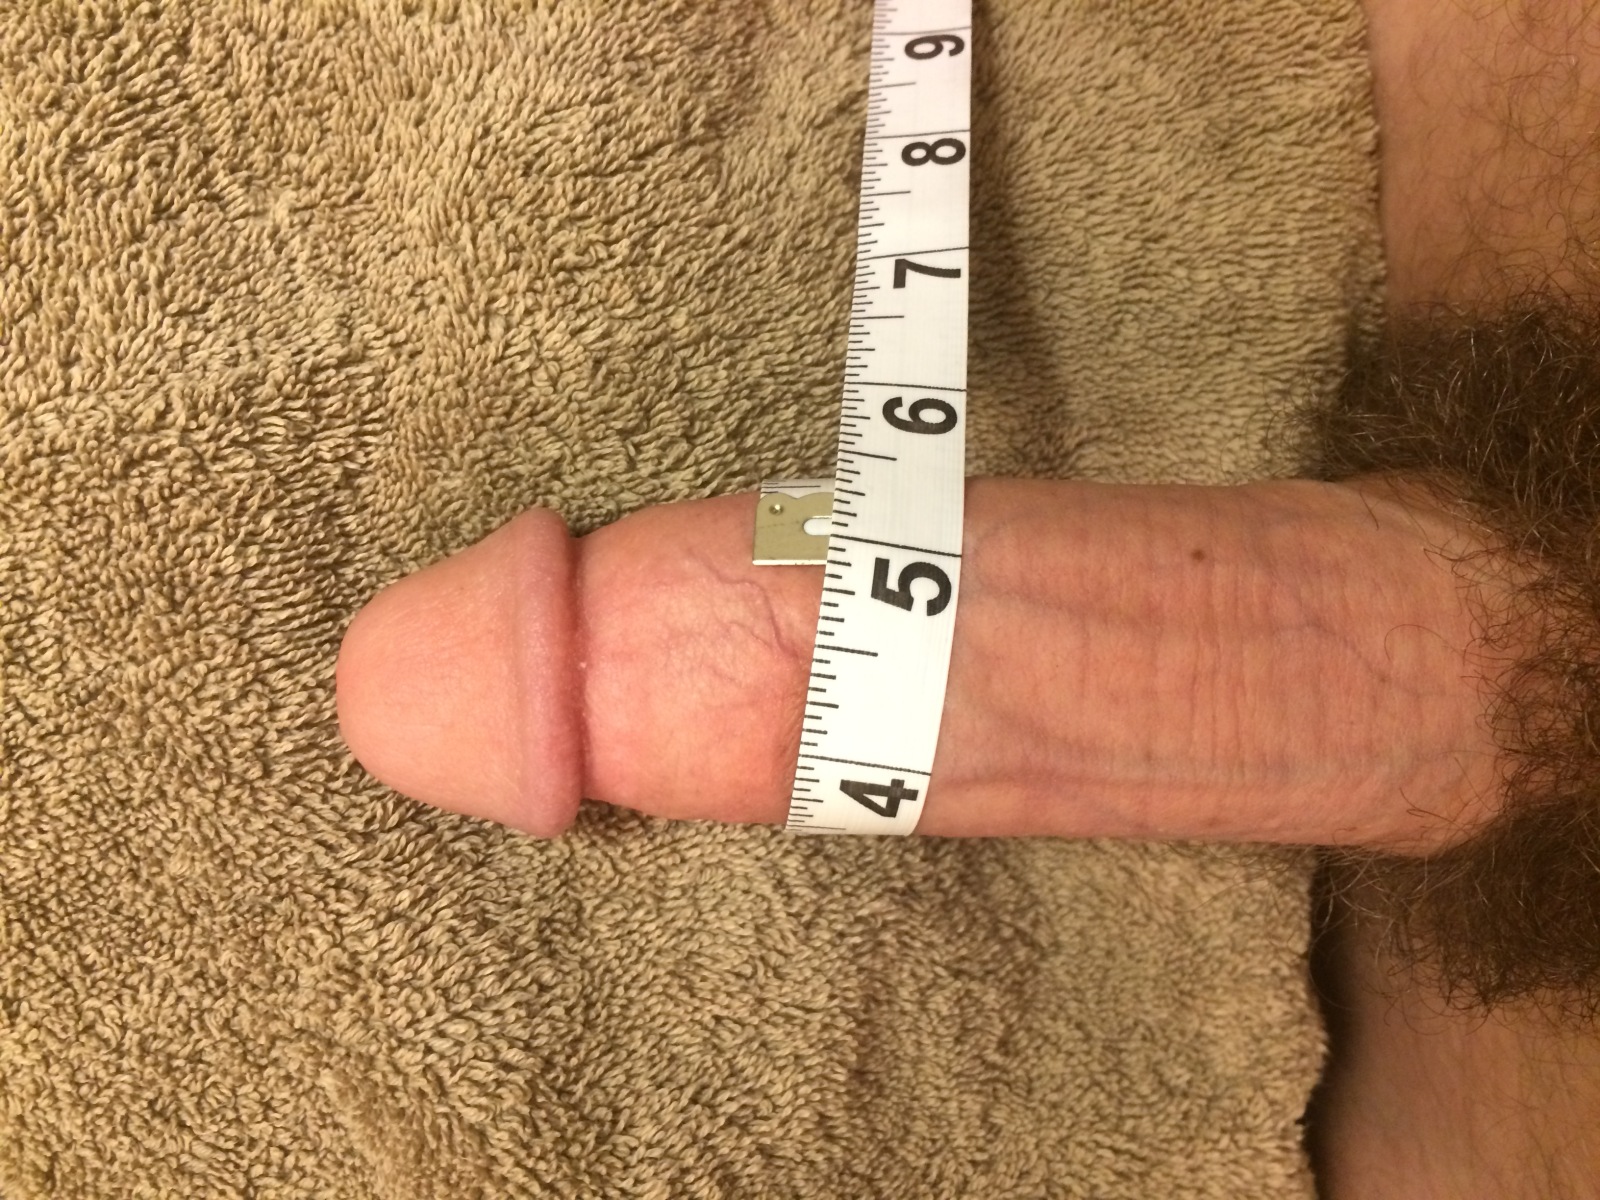 4-6 inch girth dildos